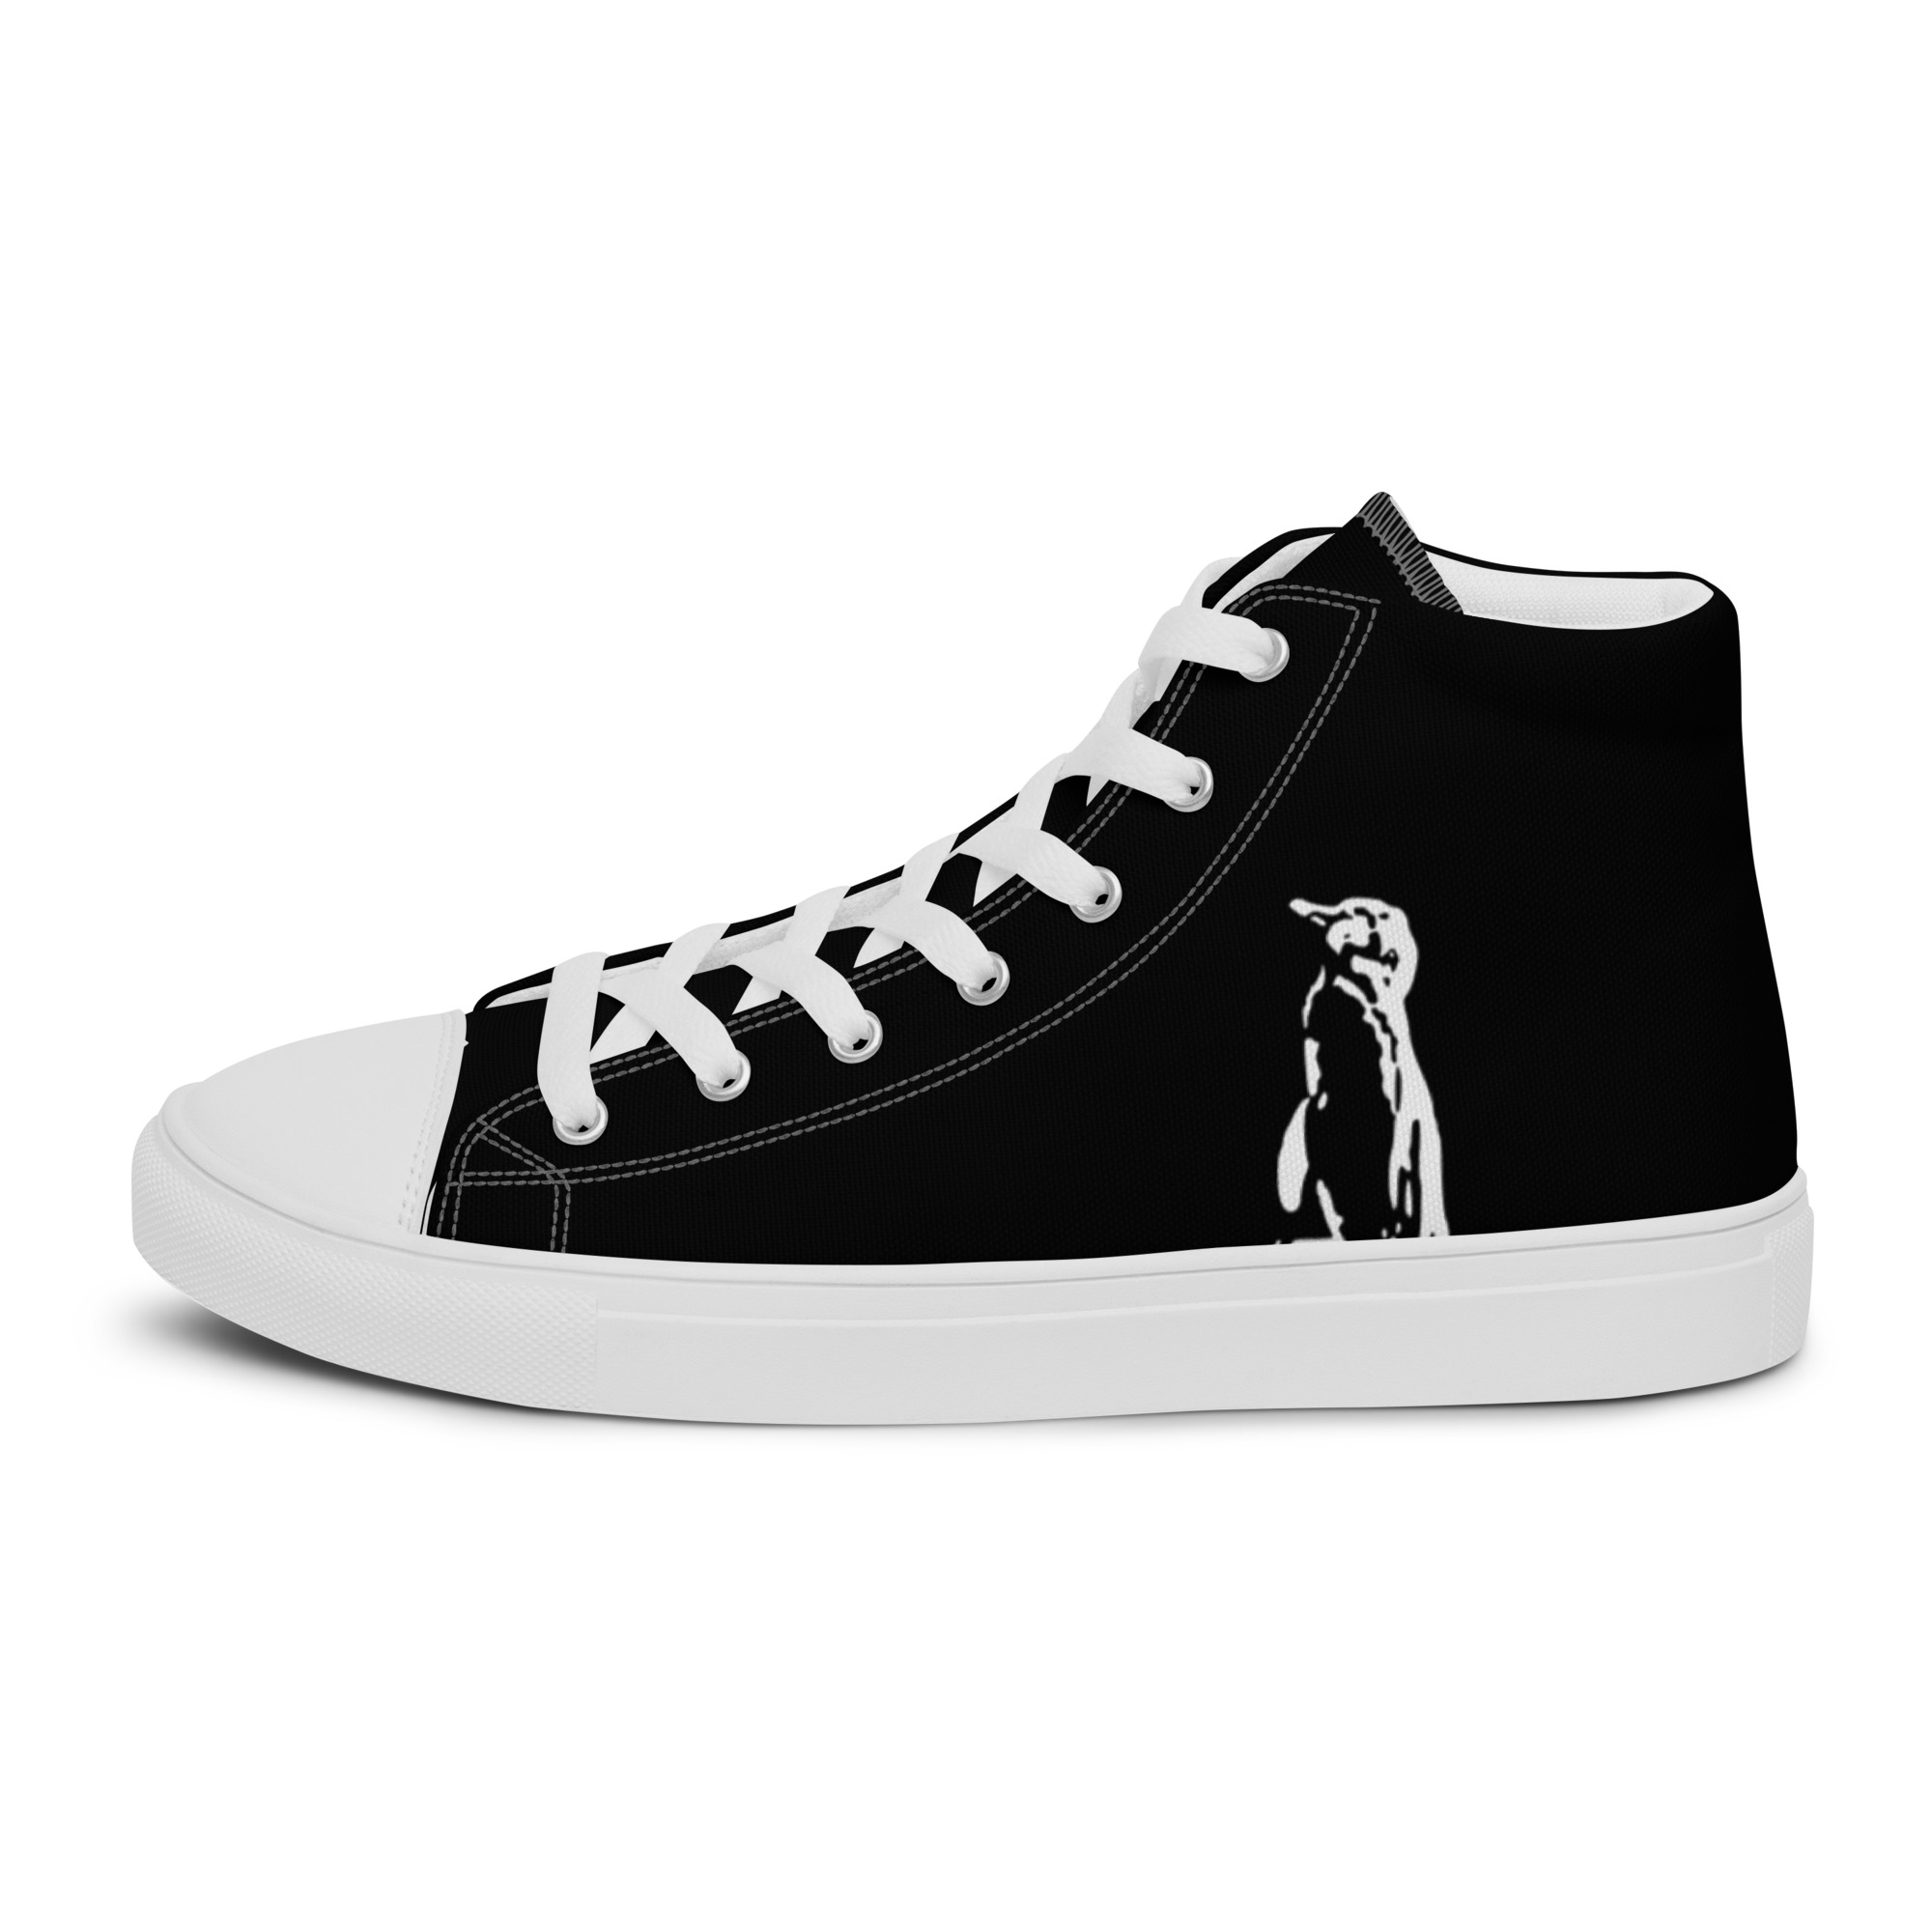 Galapaos Penguin Men’s sized black high top canvas shoes